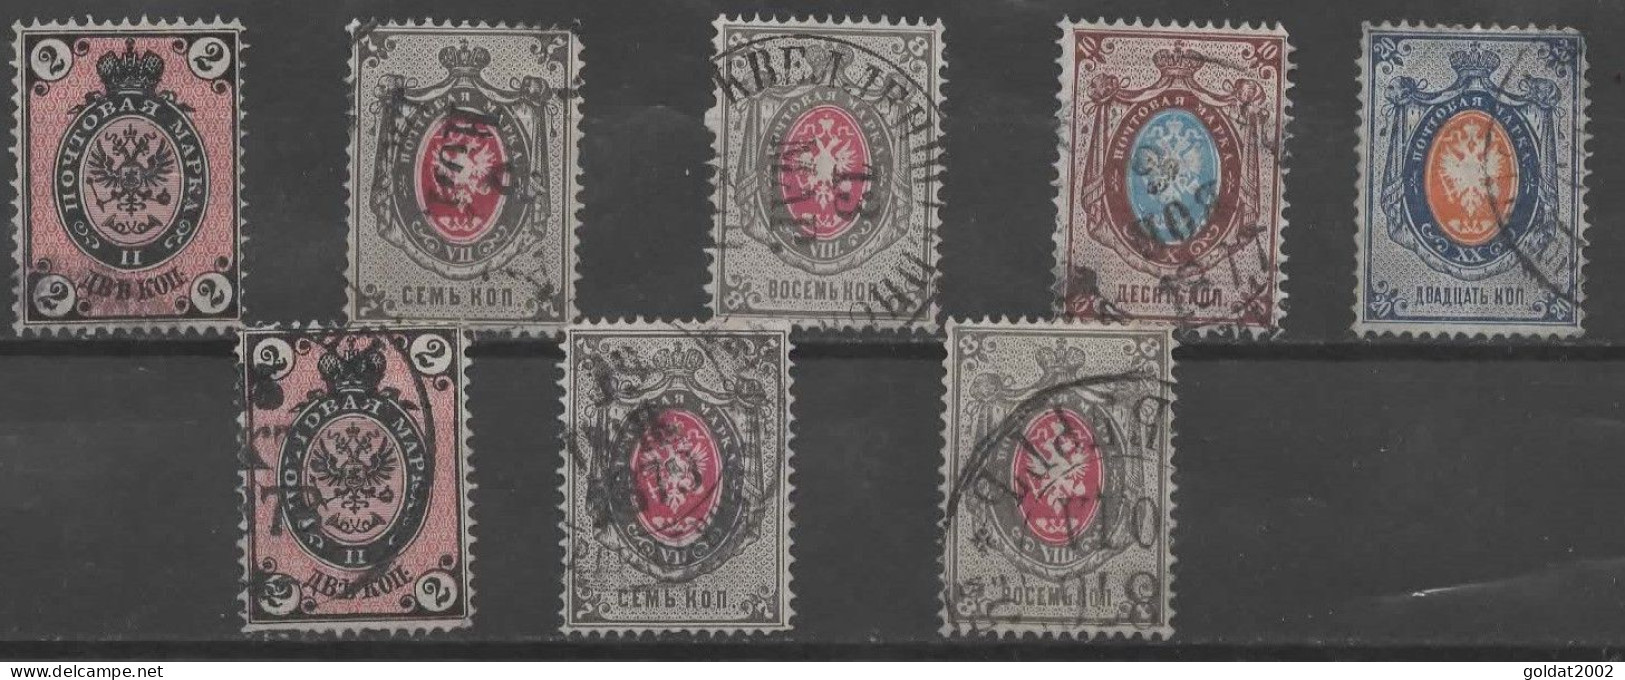 Imperial Russia 1875,Sc # 26-30+Sc #26a,27b,28a,Horiz.+Vertic.laid Paper,Used . - Gebruikt